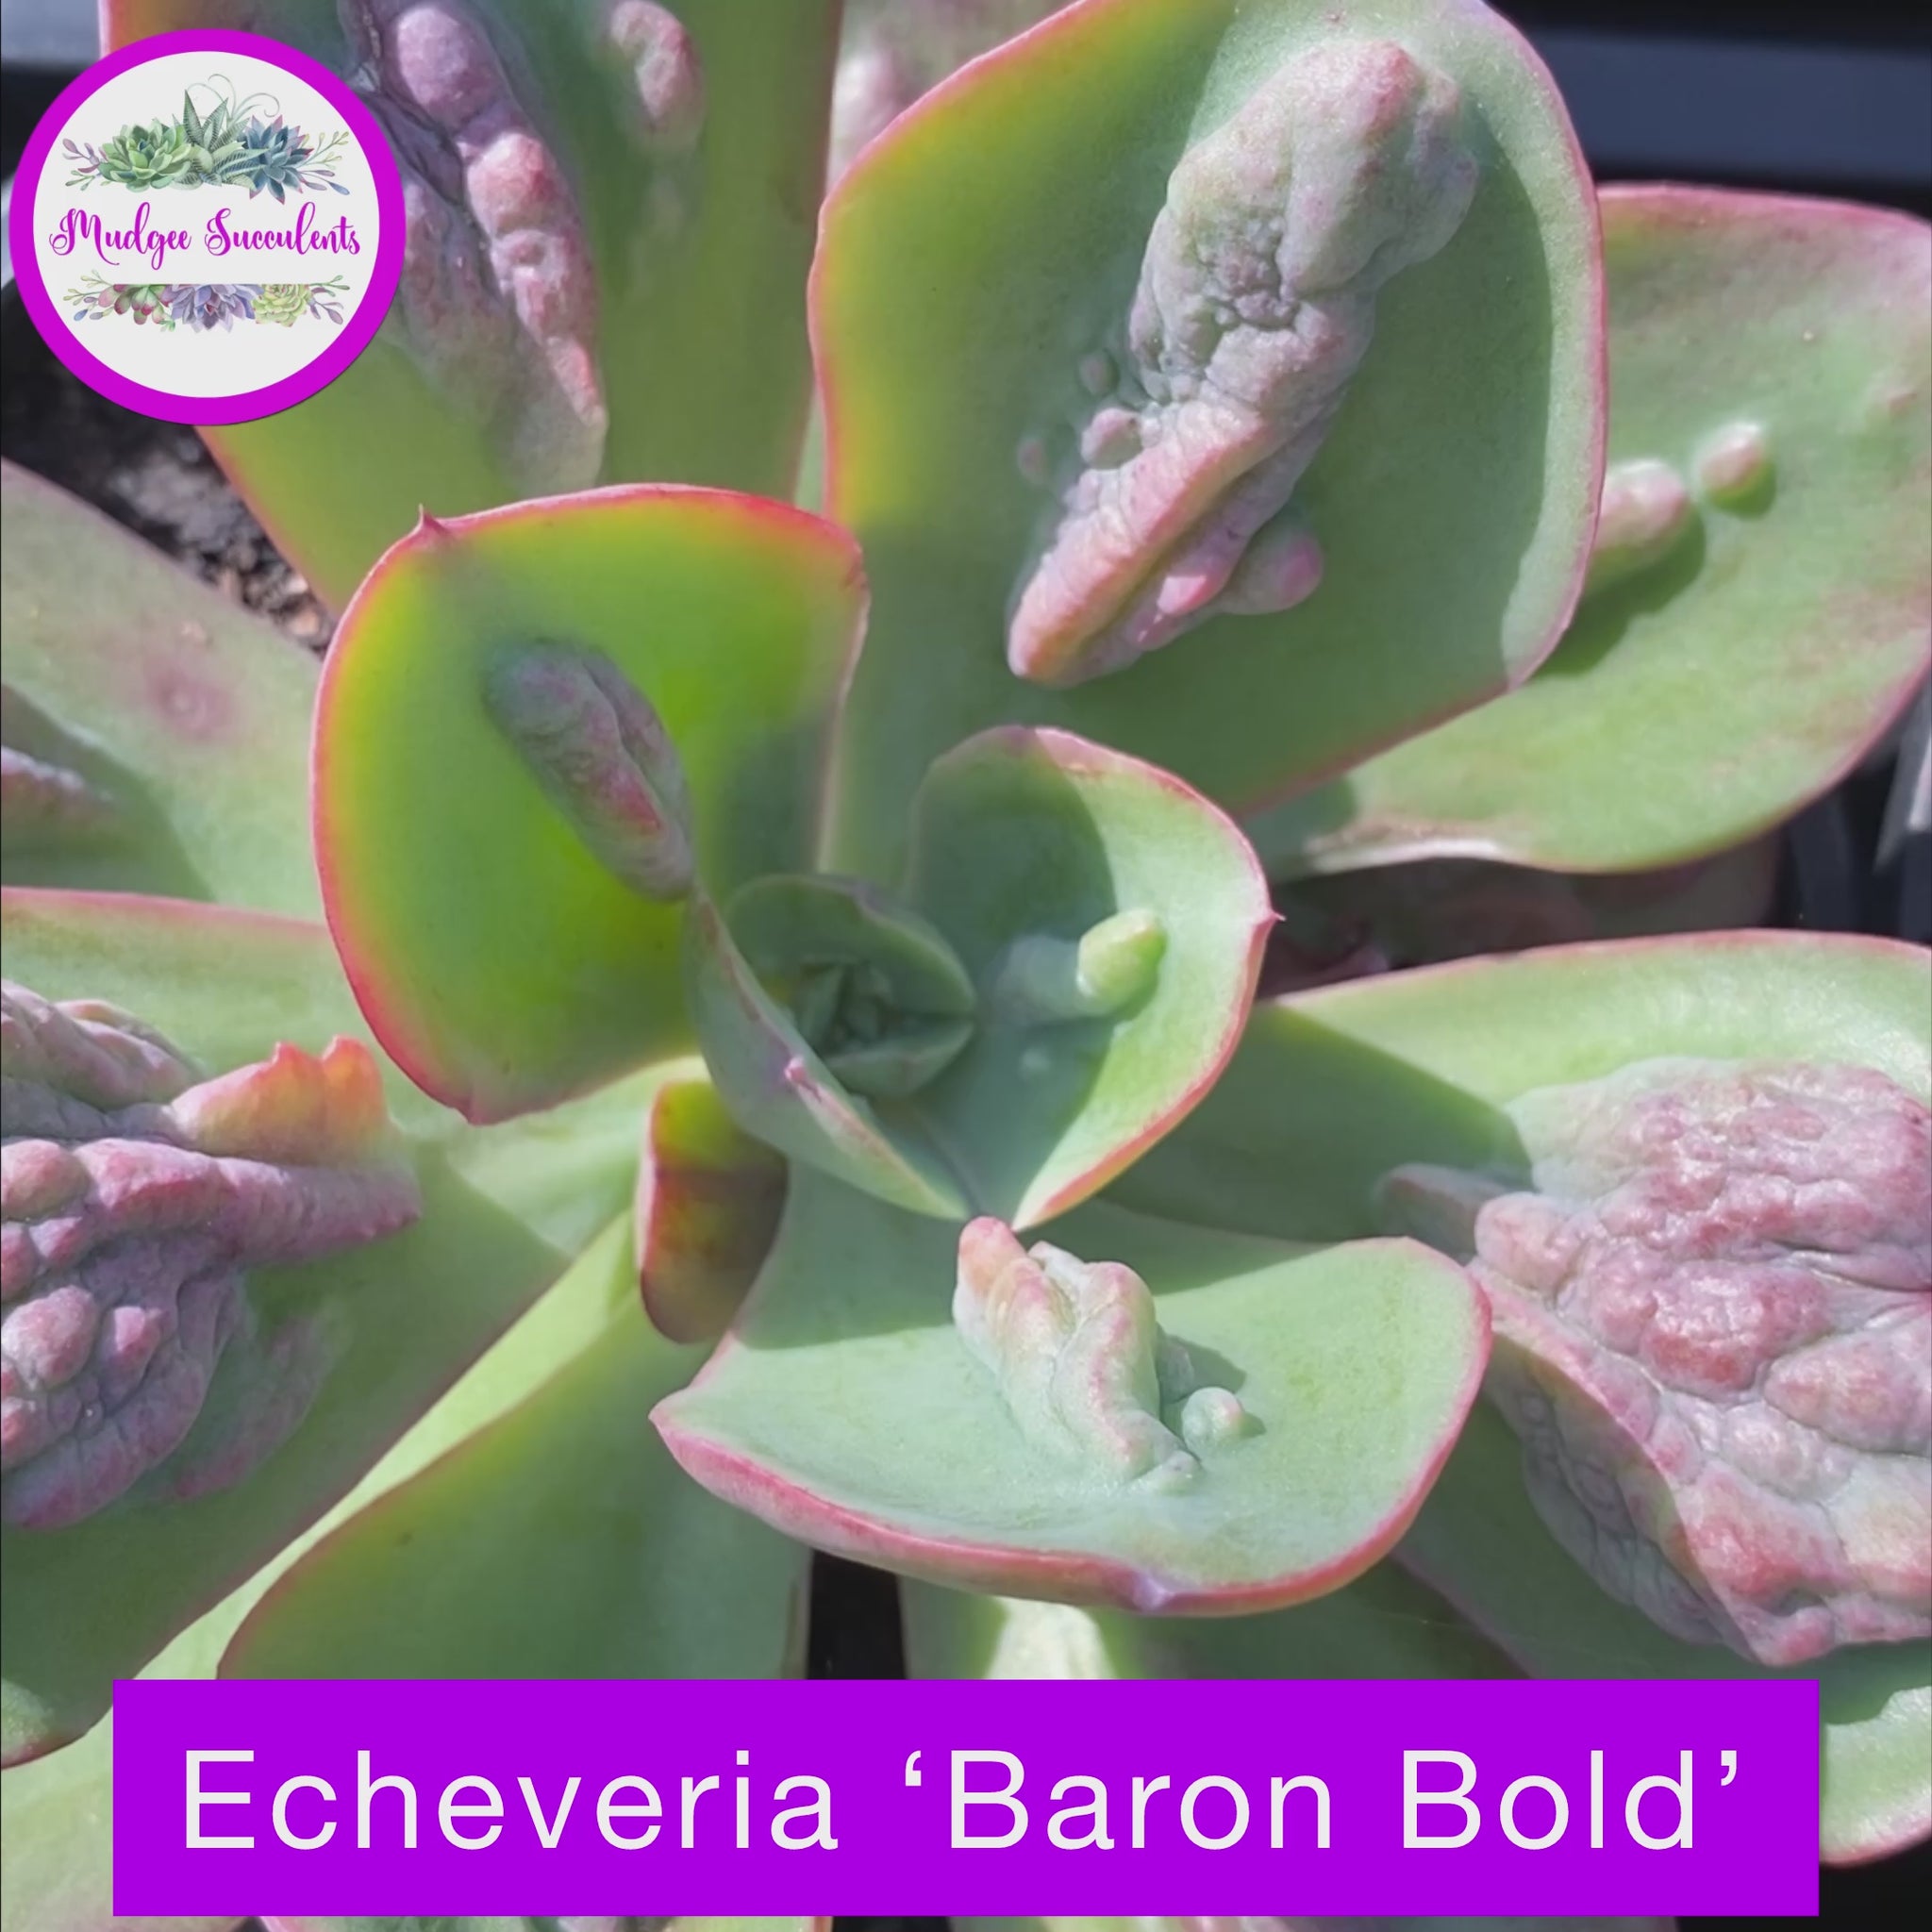 Video of Echeveria 'Baron Bold' - Mudgee Succulents Online Shop 